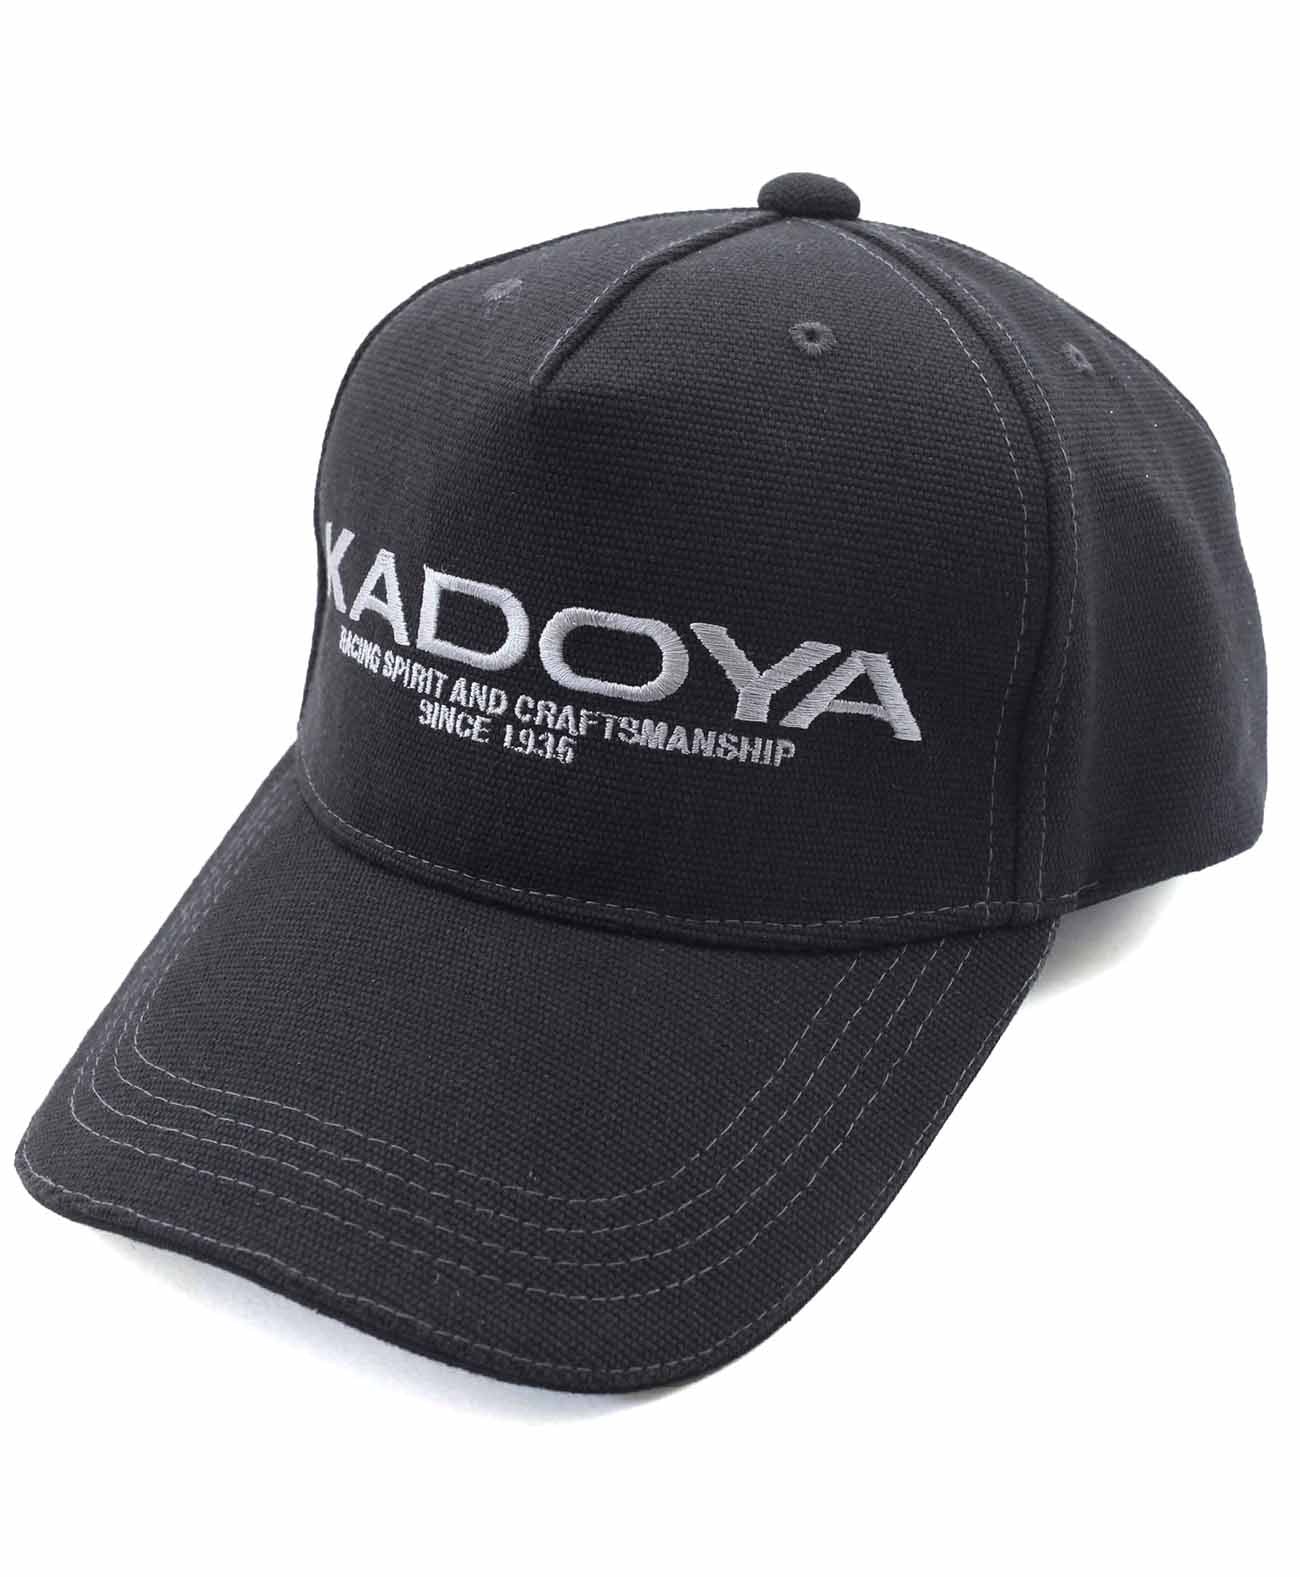 Topi logo kadoya / hitam / abu -abu